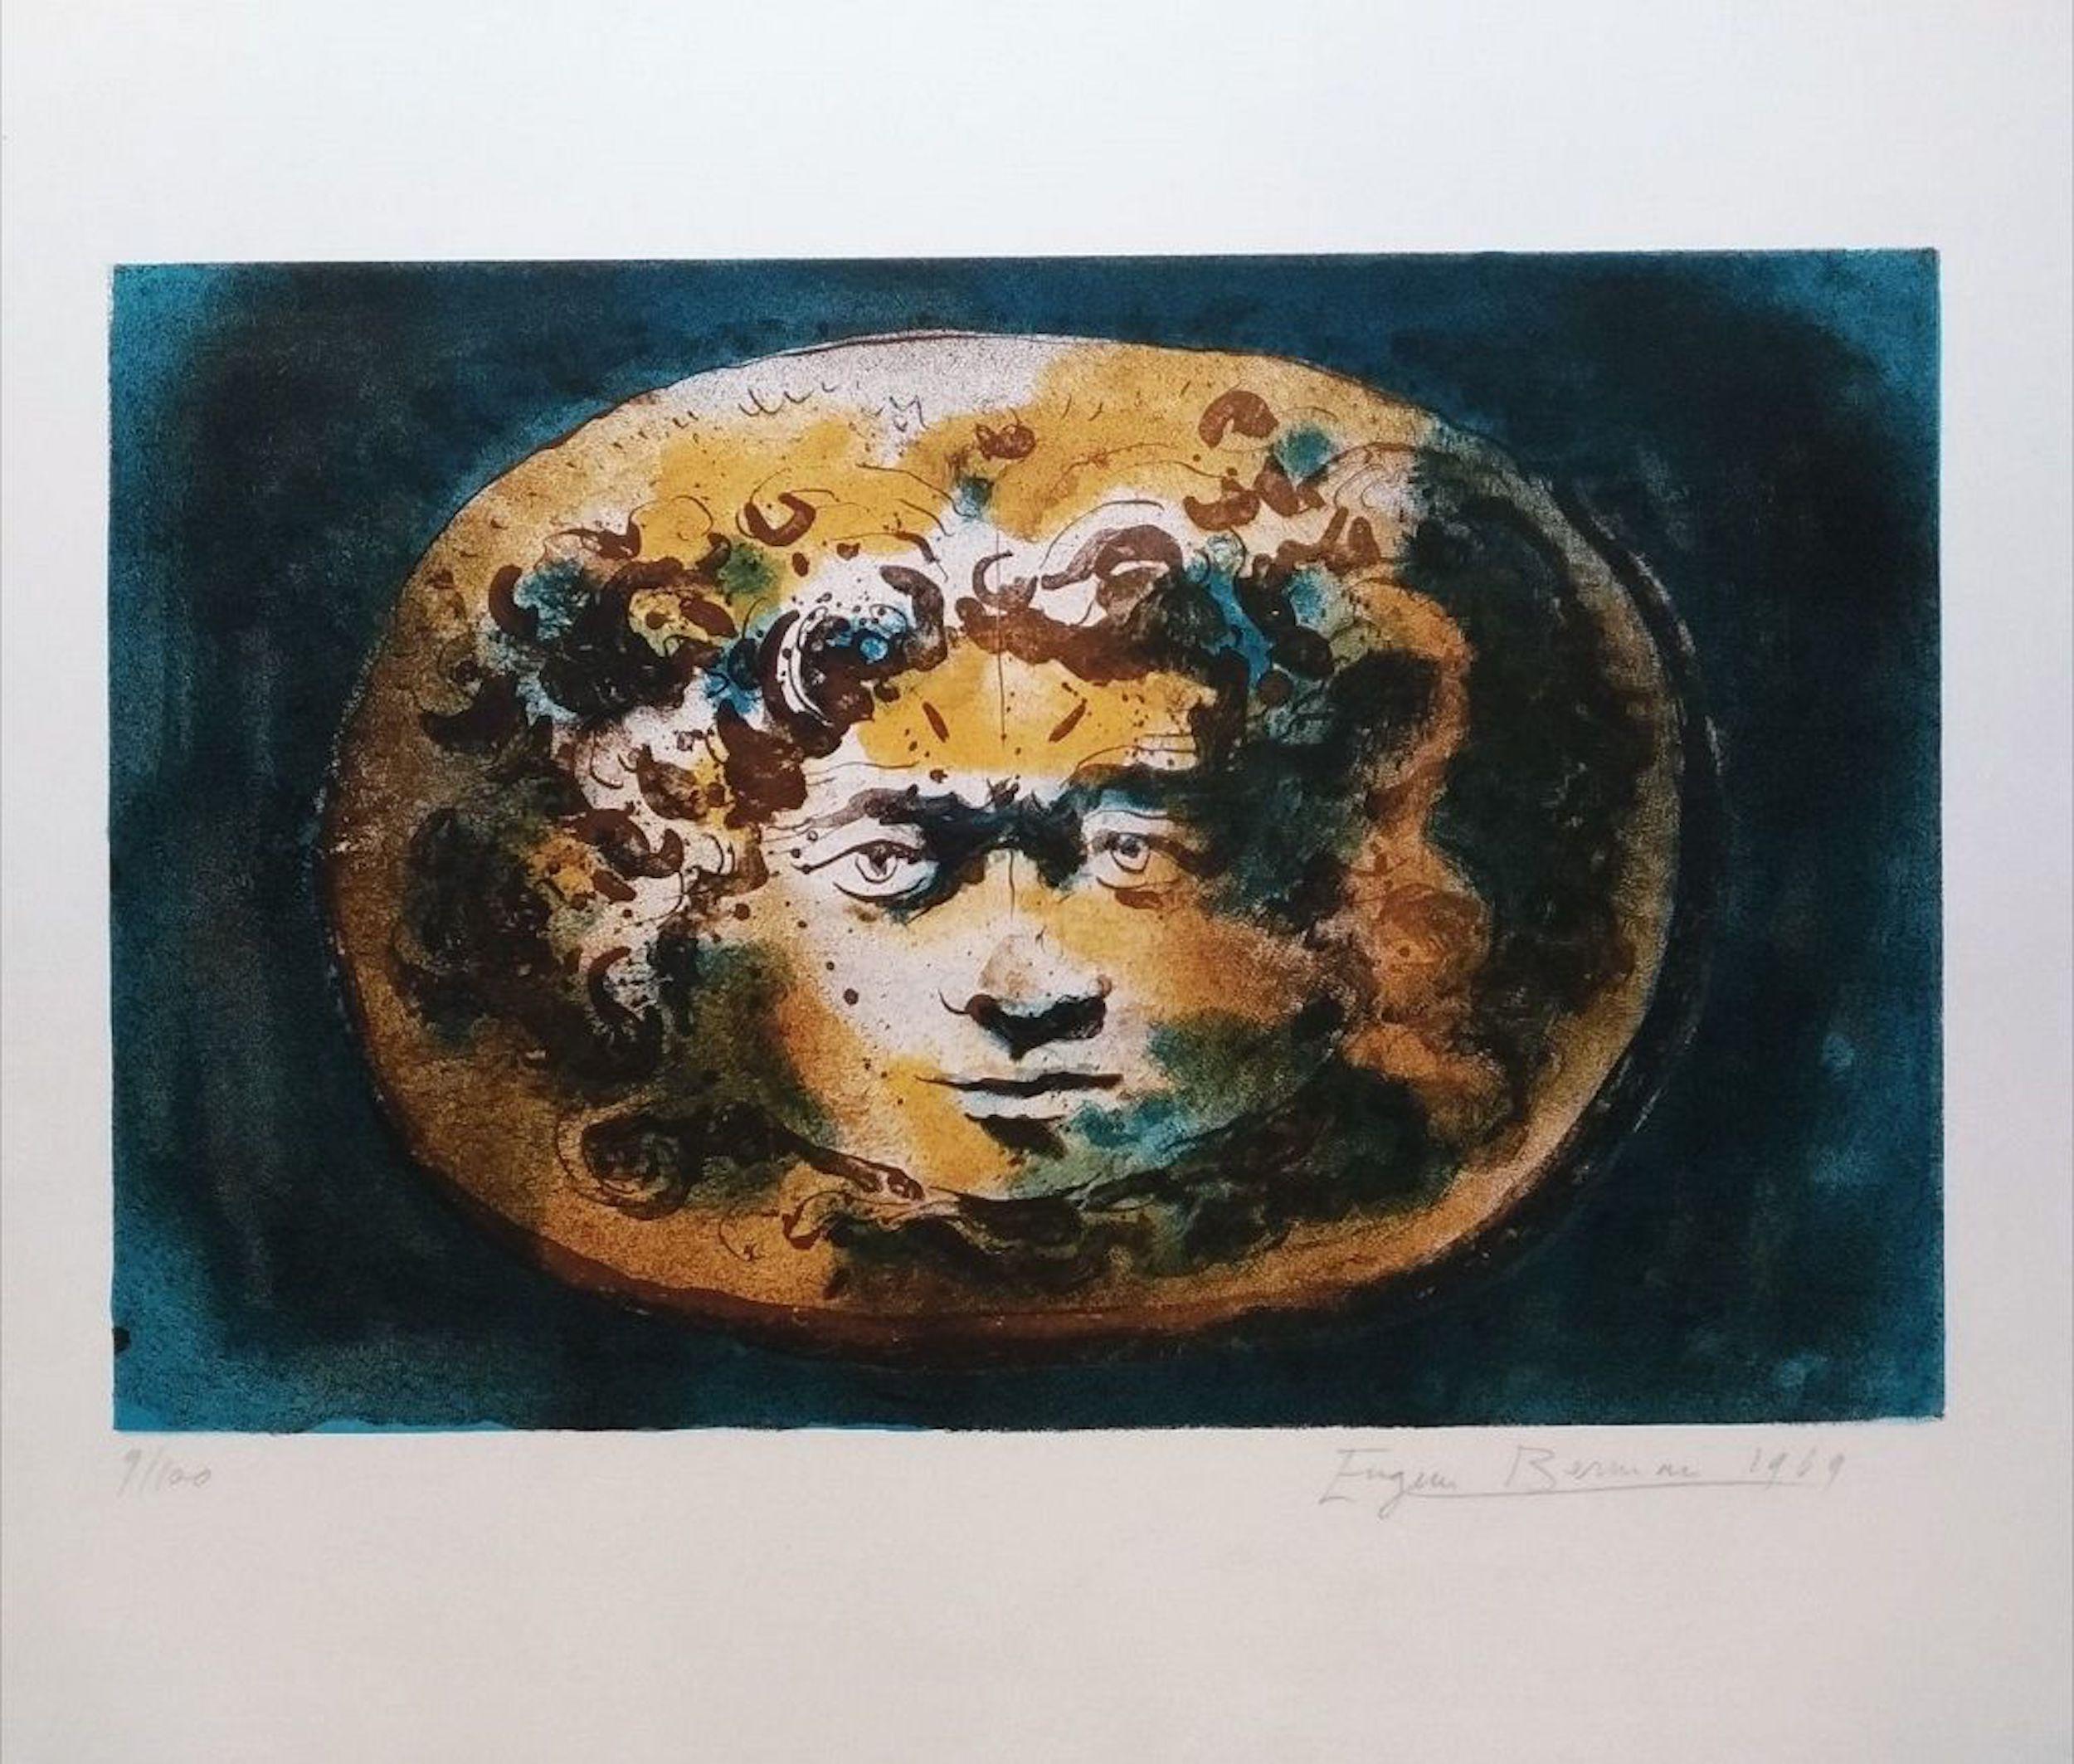 Eugene Berman Figurative Print - Head of Medusa - Original Lithograph by Eugène Berman - 1969